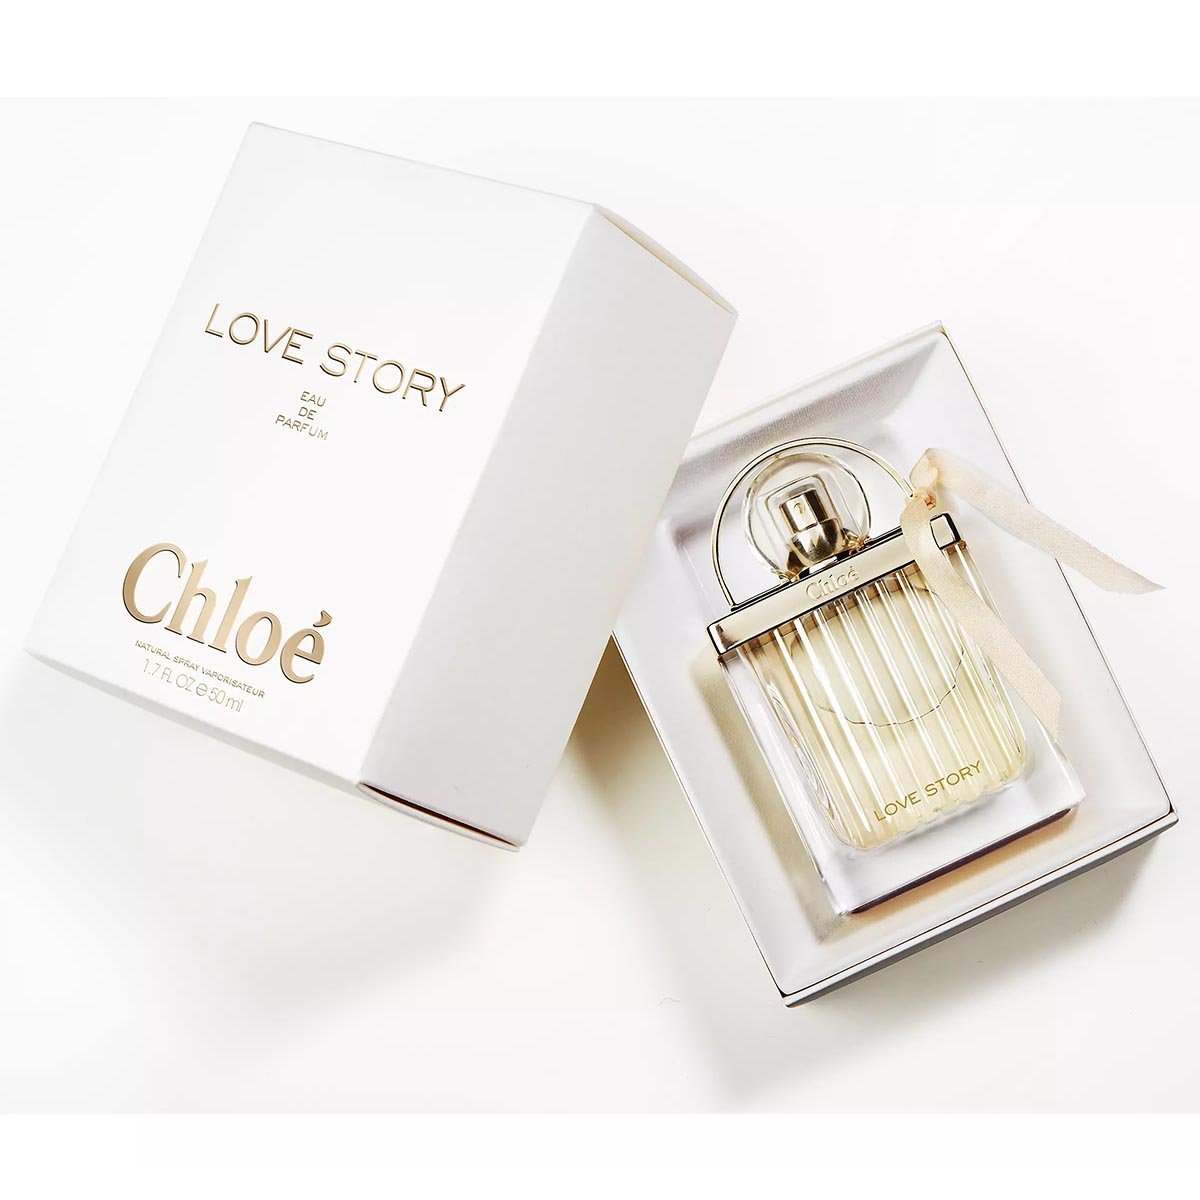 Chloé Love Story EDP - My Perfume Shop Australia